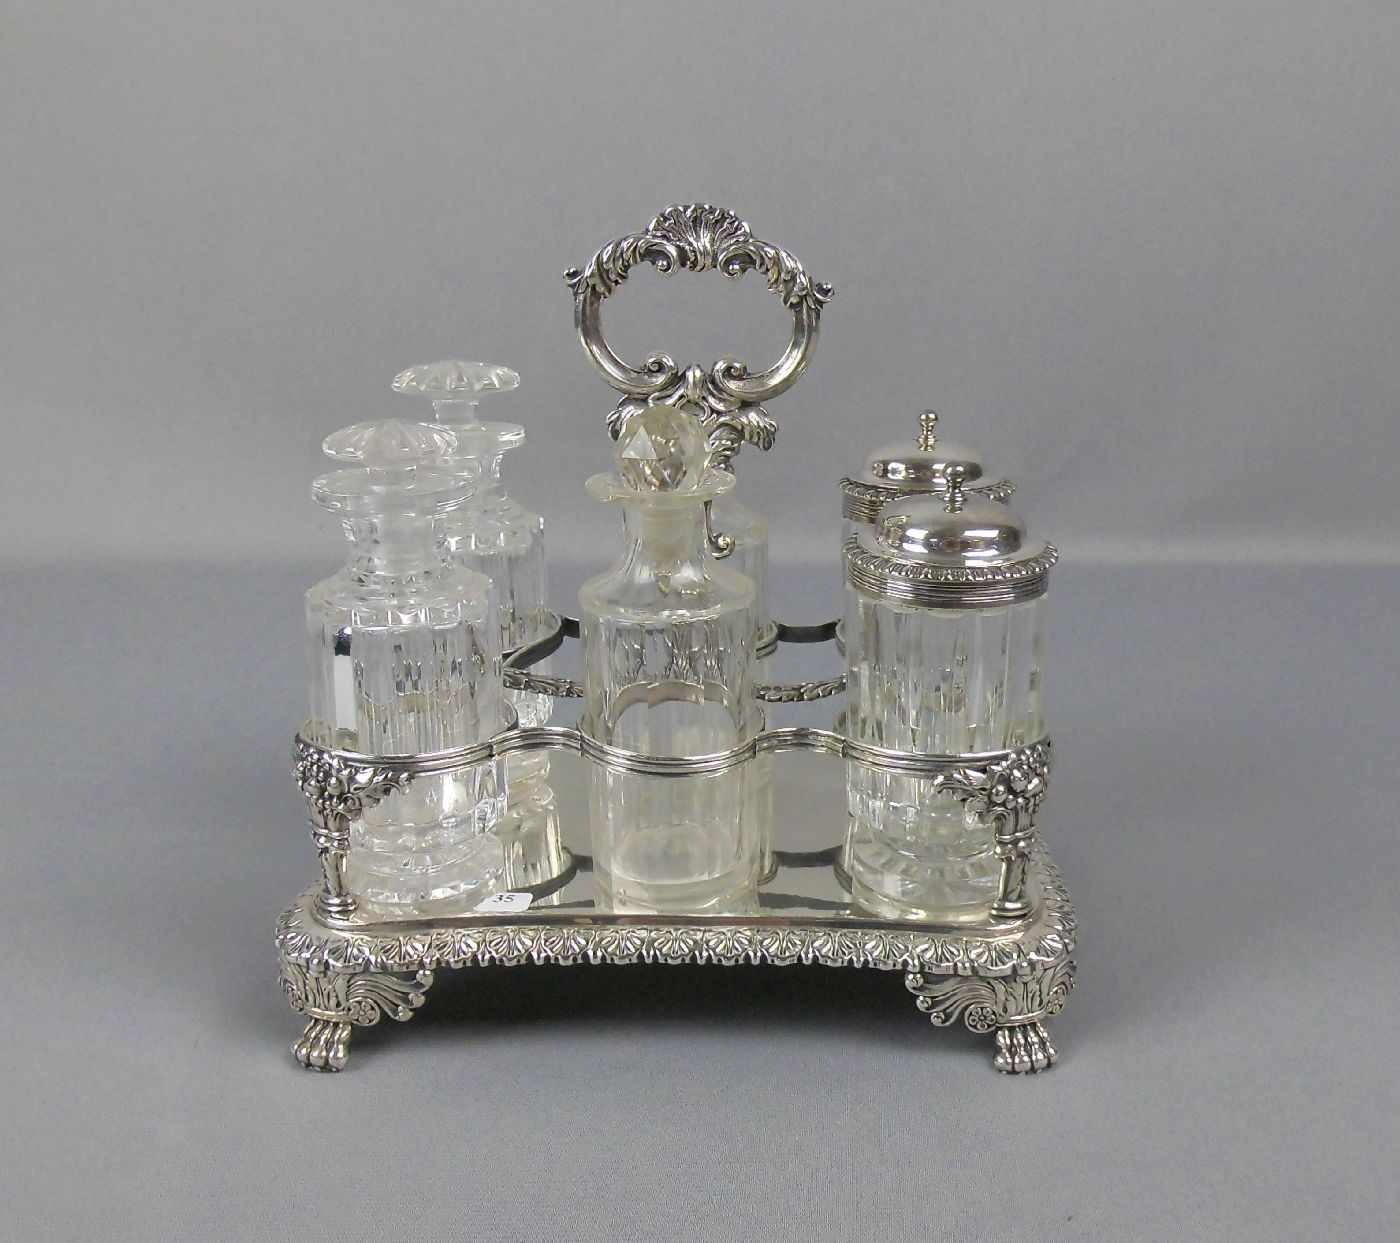 GROSSE GEWÜRZ - MENAGE / silver cruet, Glas, Sterlingsilber (612 g), London, 1822, Georg IV.,